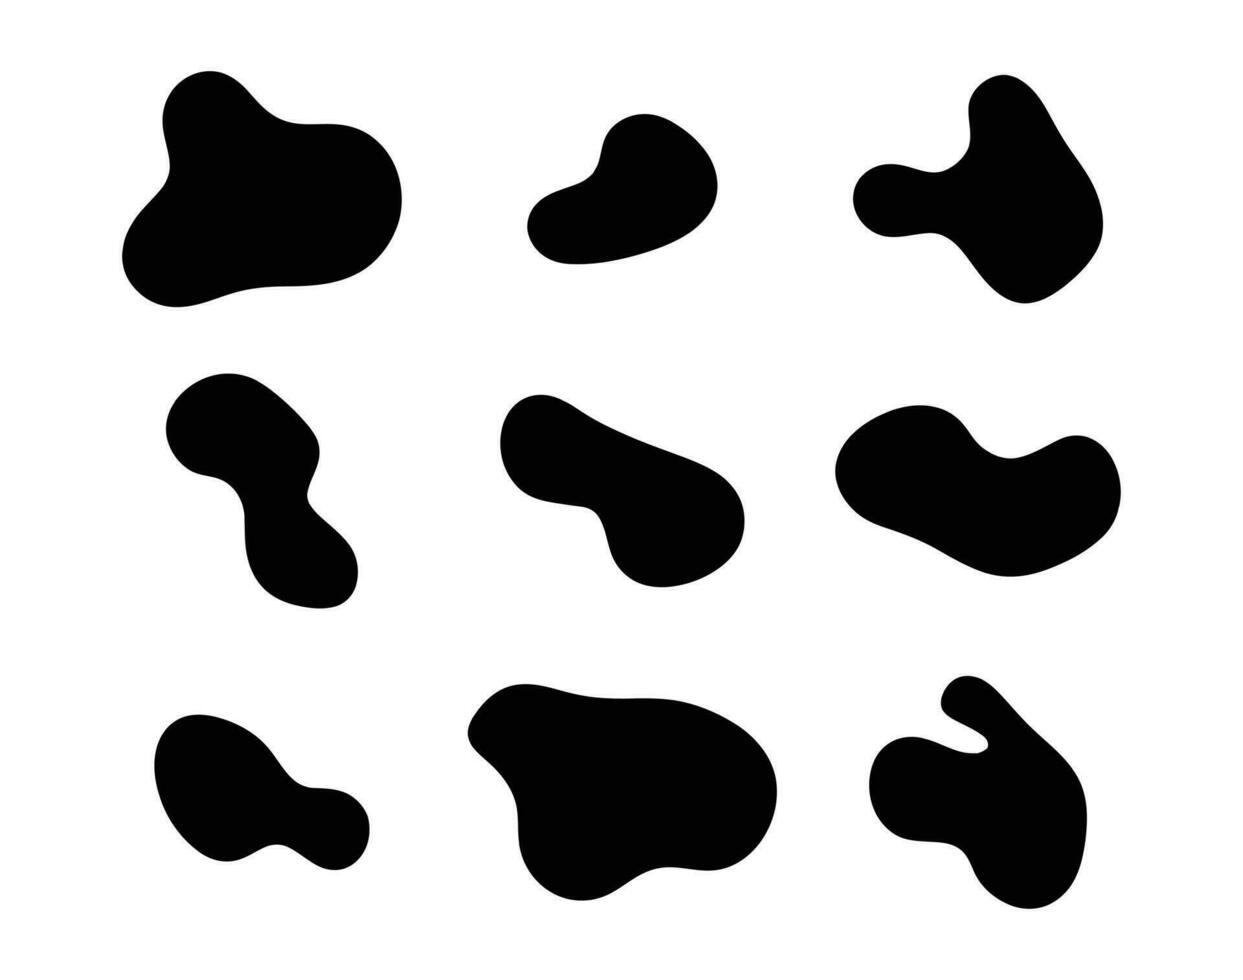 Liquid blob shape abstract elements graphic flat style design fluid vector